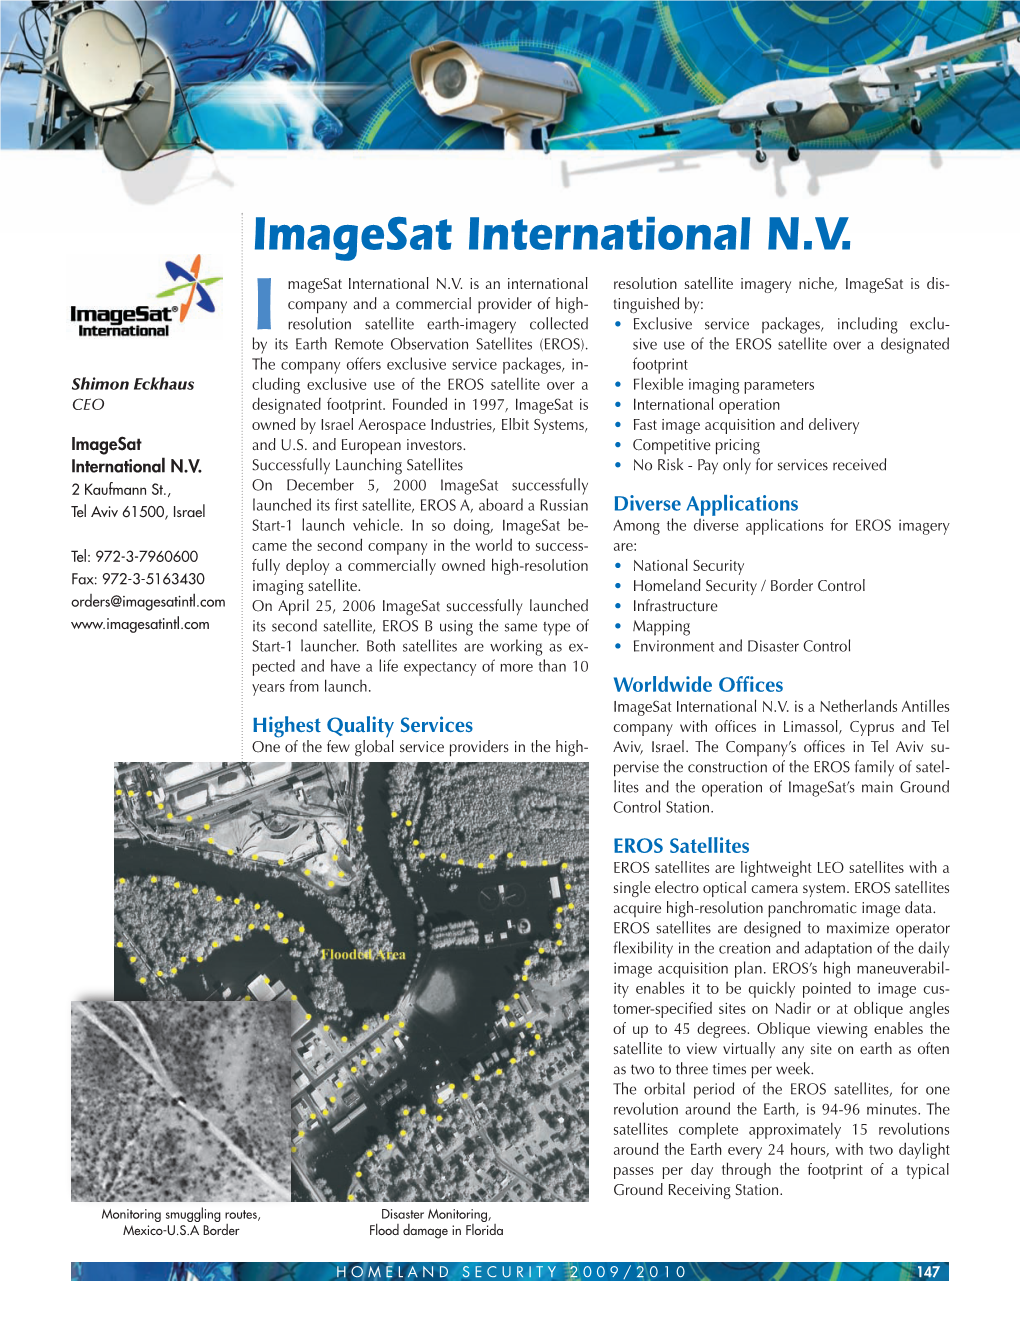 Imagesat International N.V